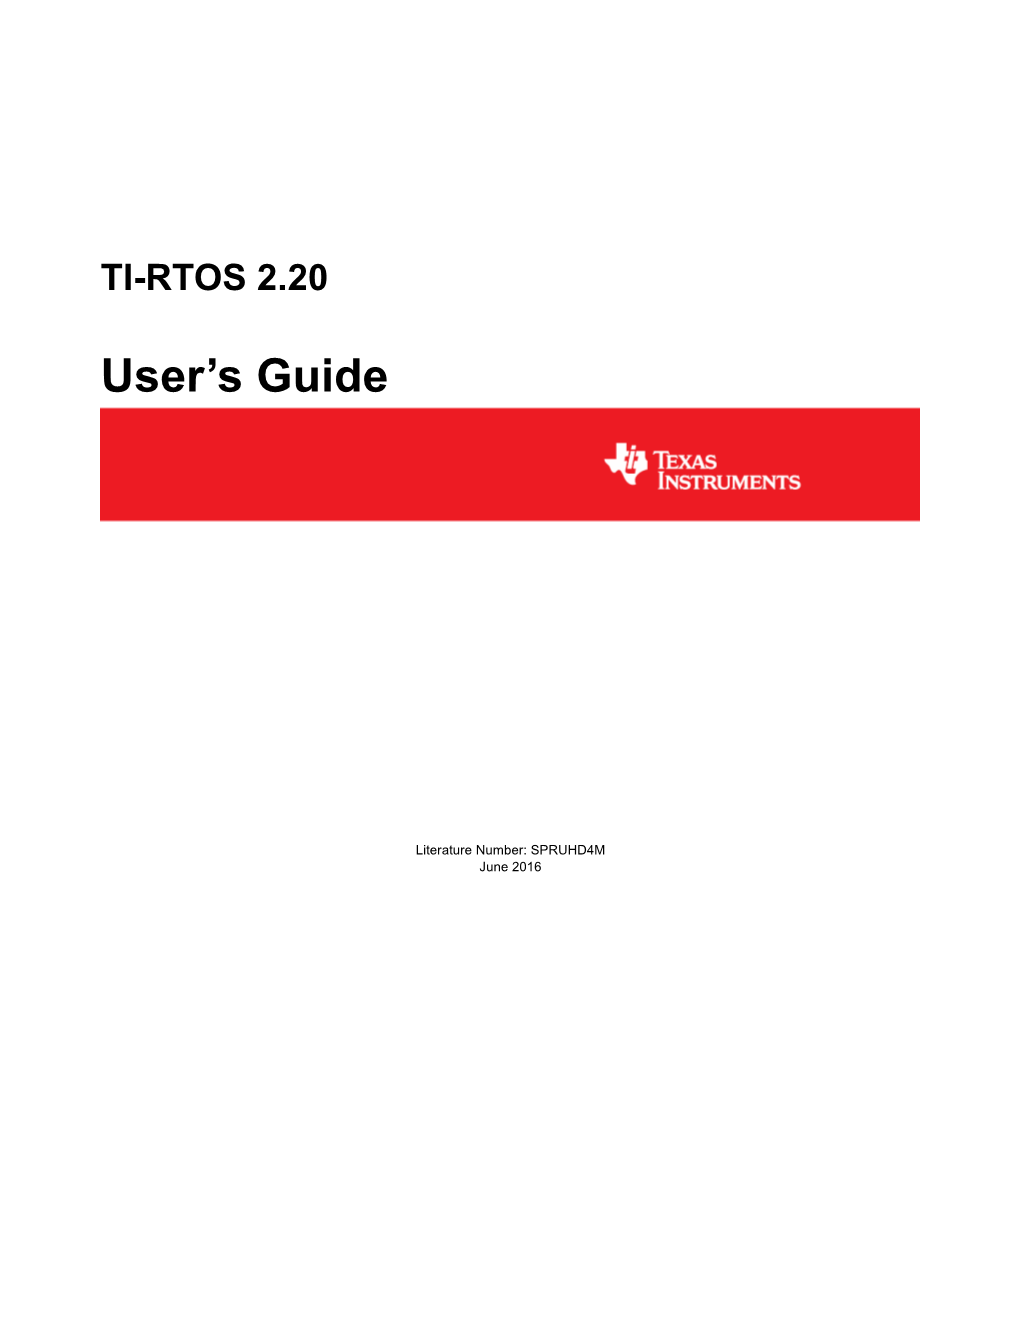 TI-RTOS 2.20 User's Guide